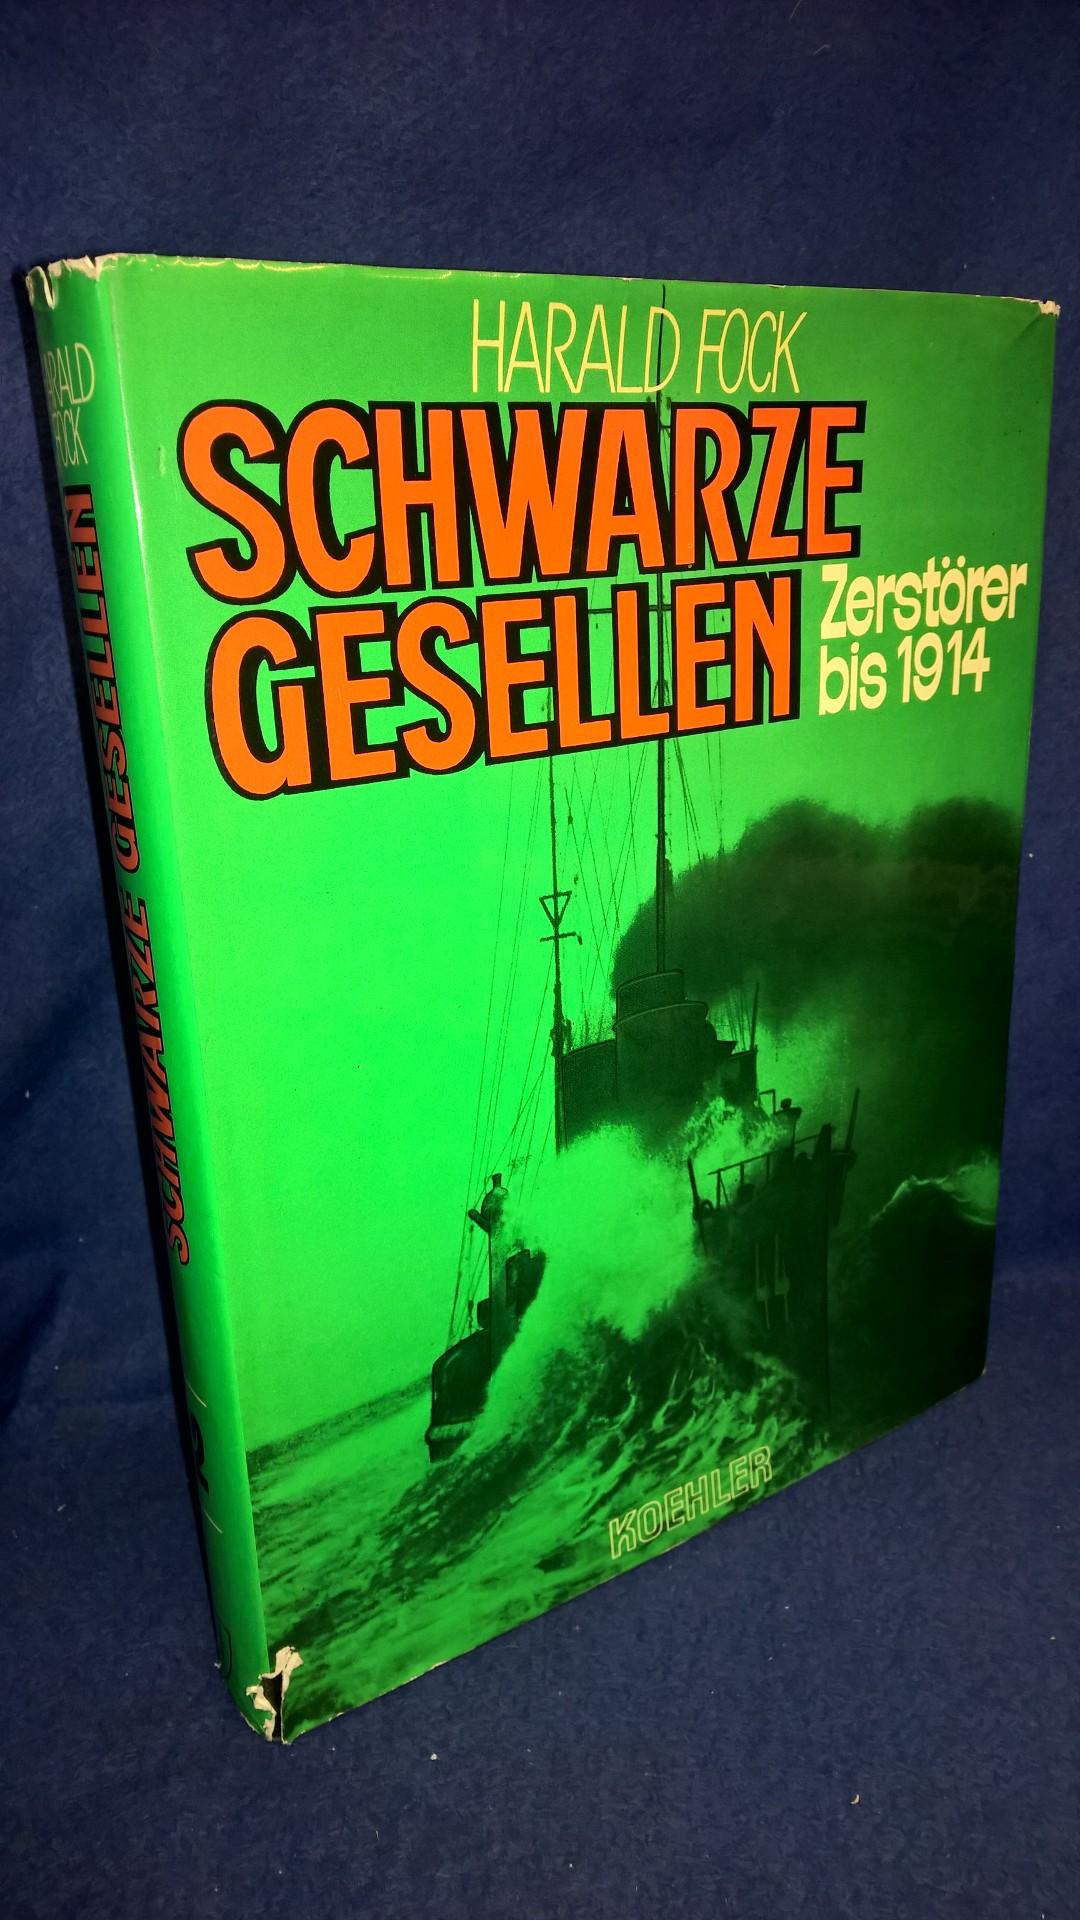 Schwarze Gesellen - Band 2: Zerstörer bis 1914.